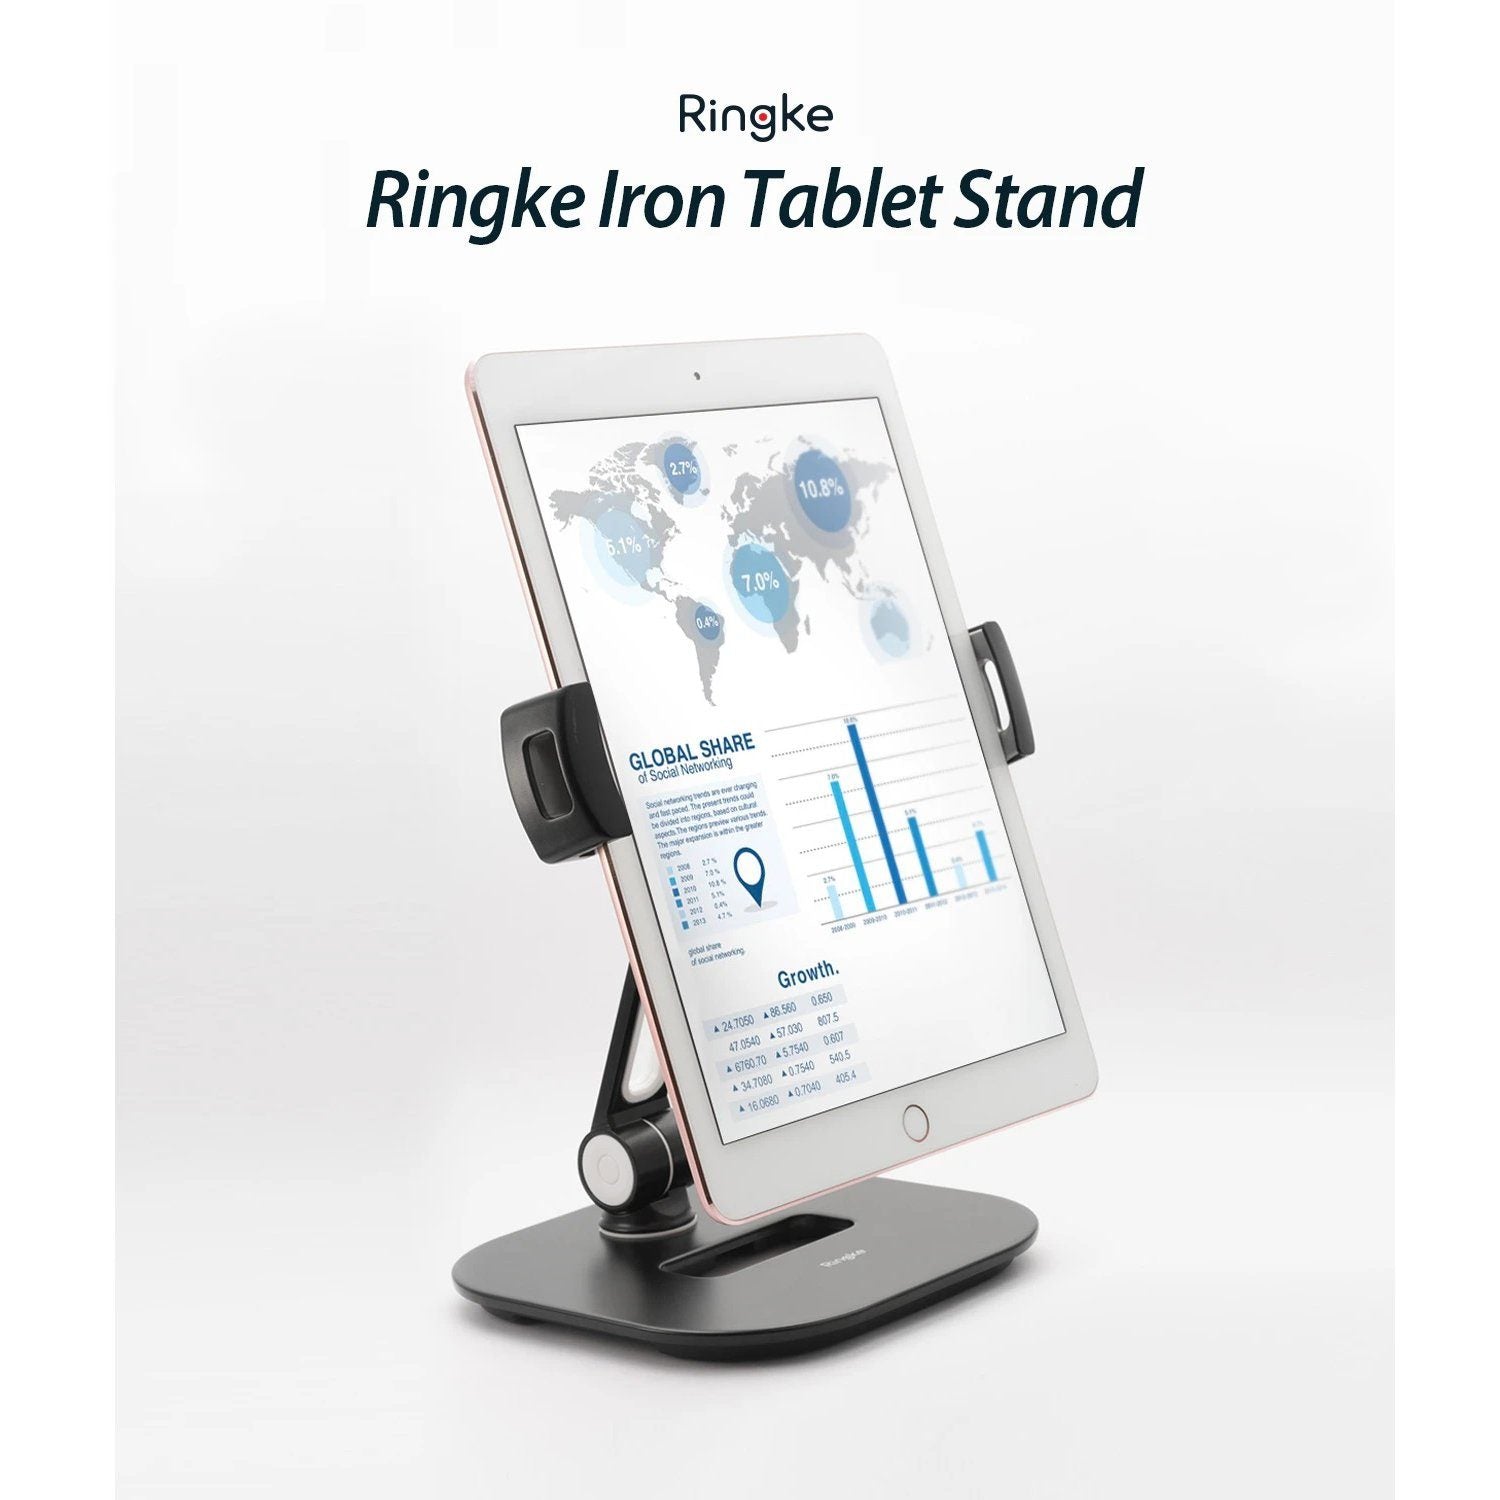 Ringke Iron Tablet Stand With Big Holder, White Default Ringke 